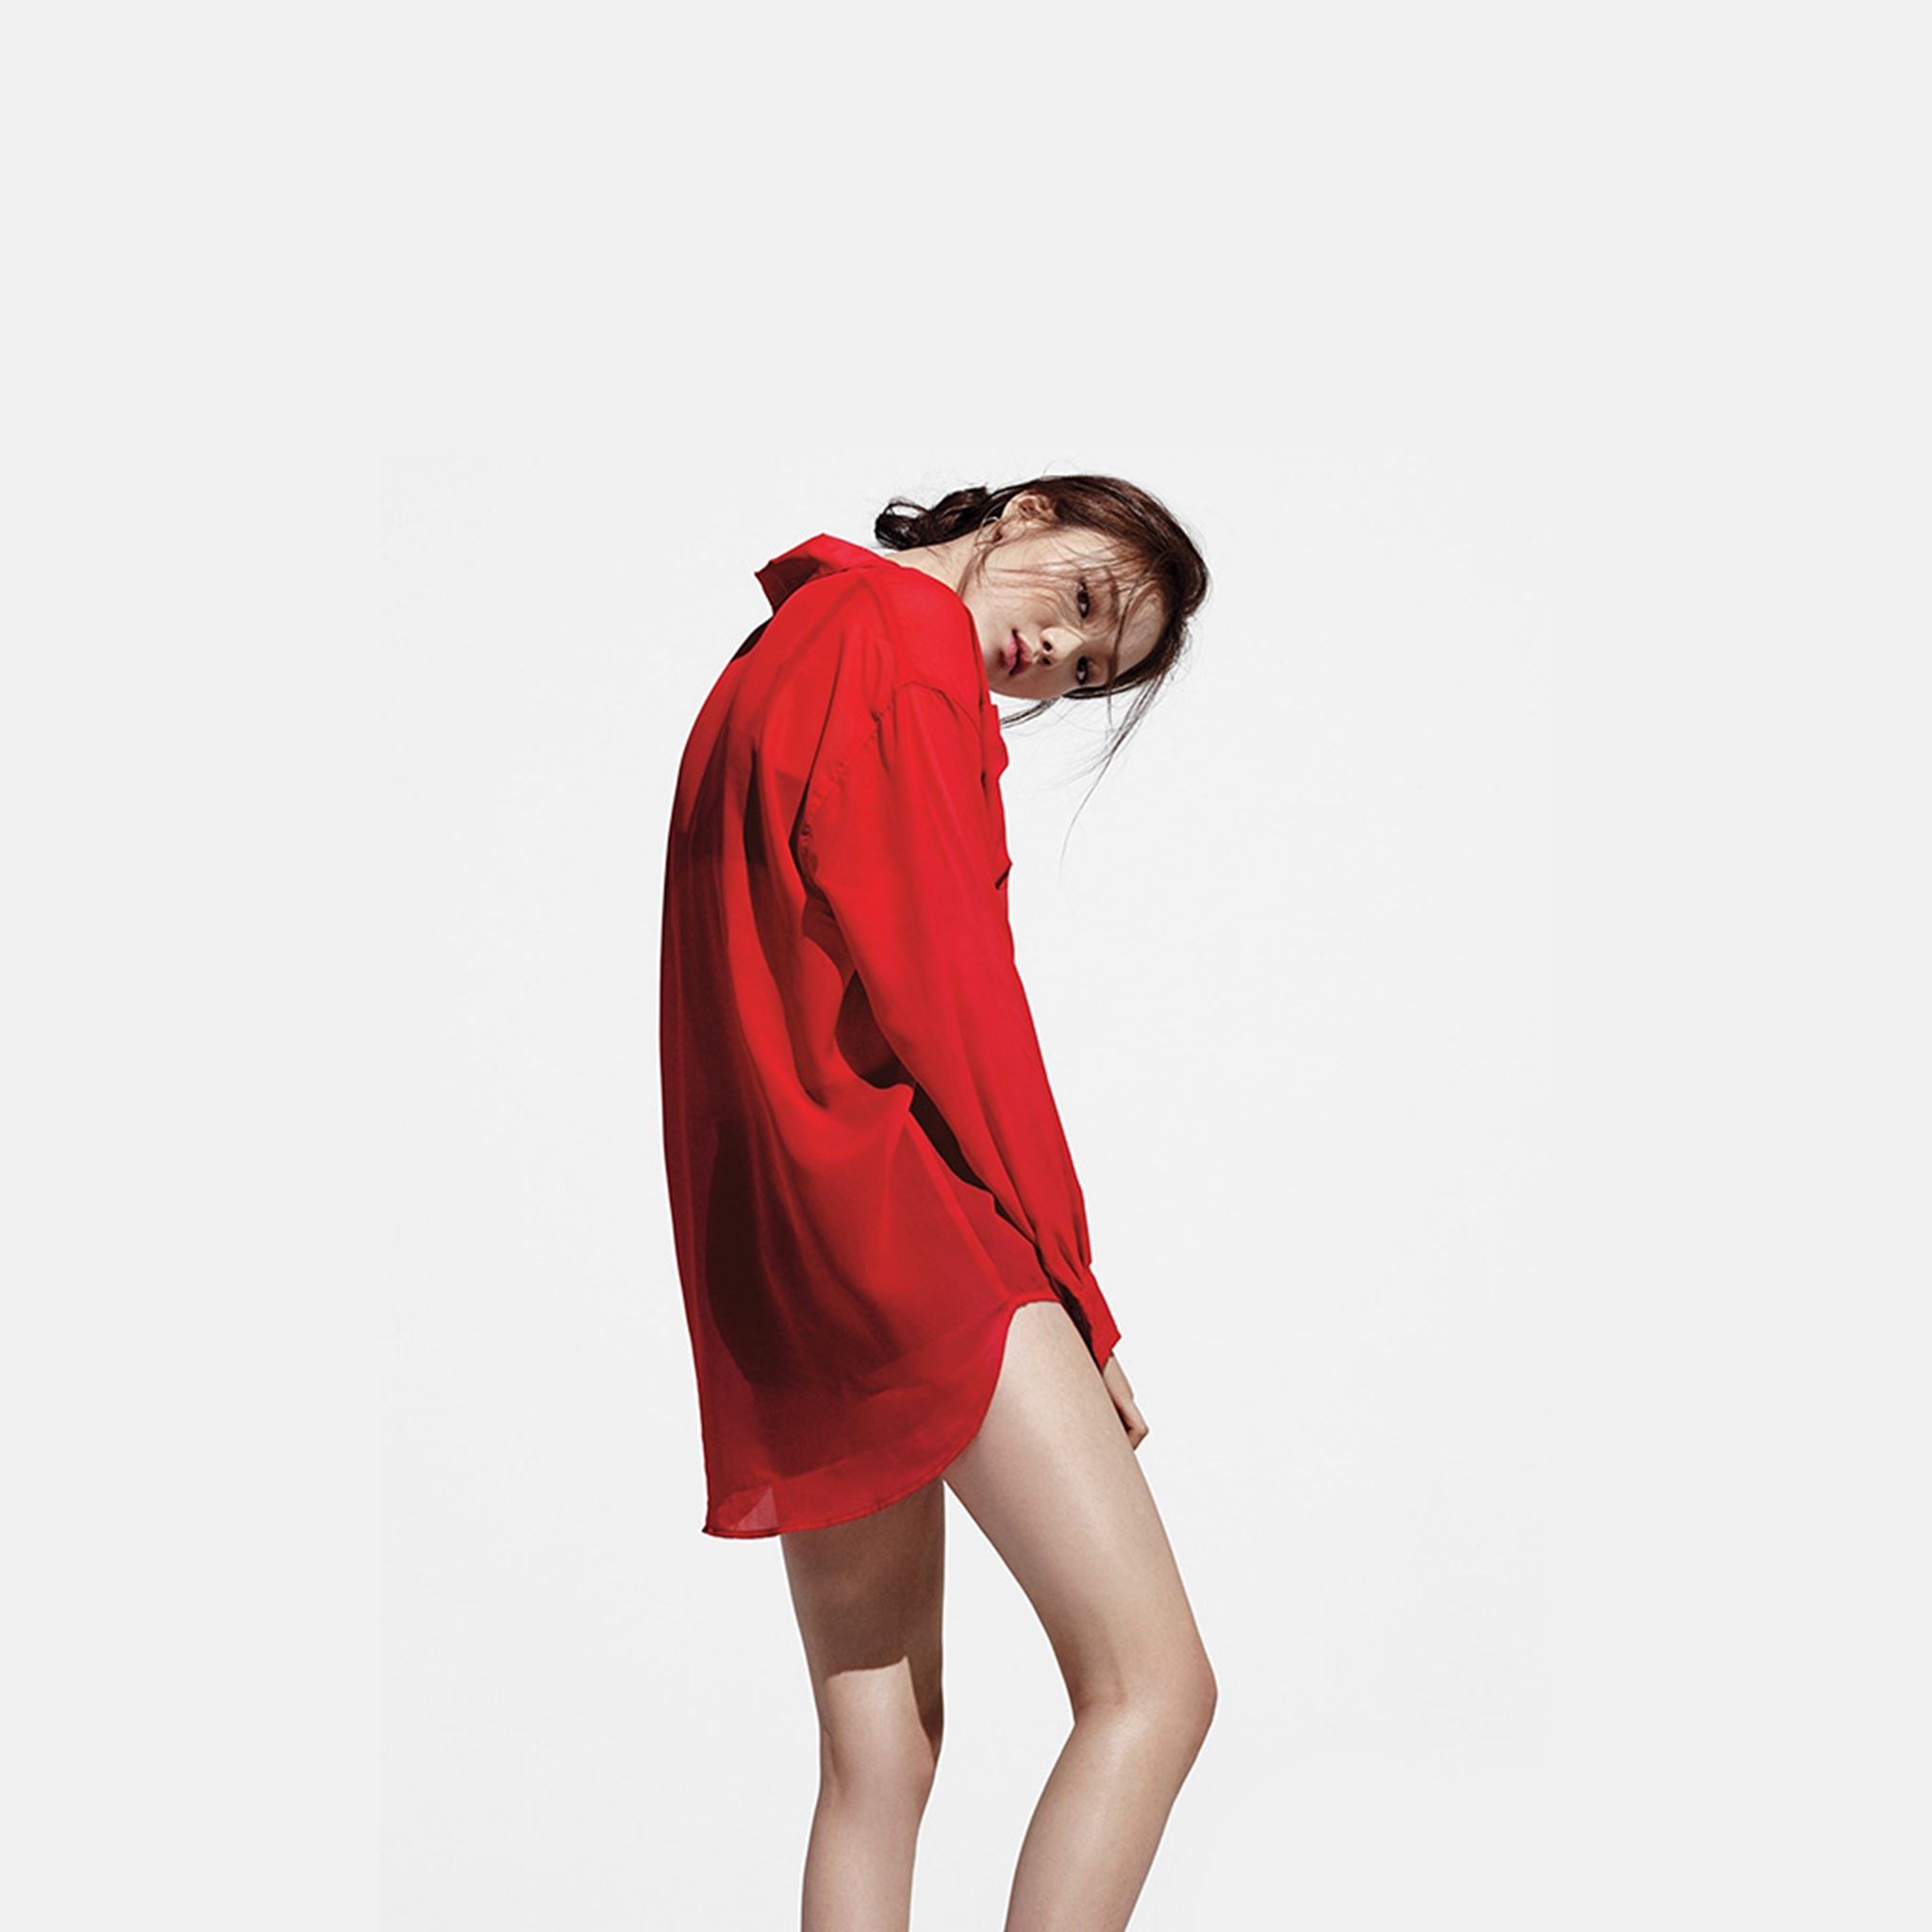 Kpop Sungkyung Model White Red iPad Air wallpaper 